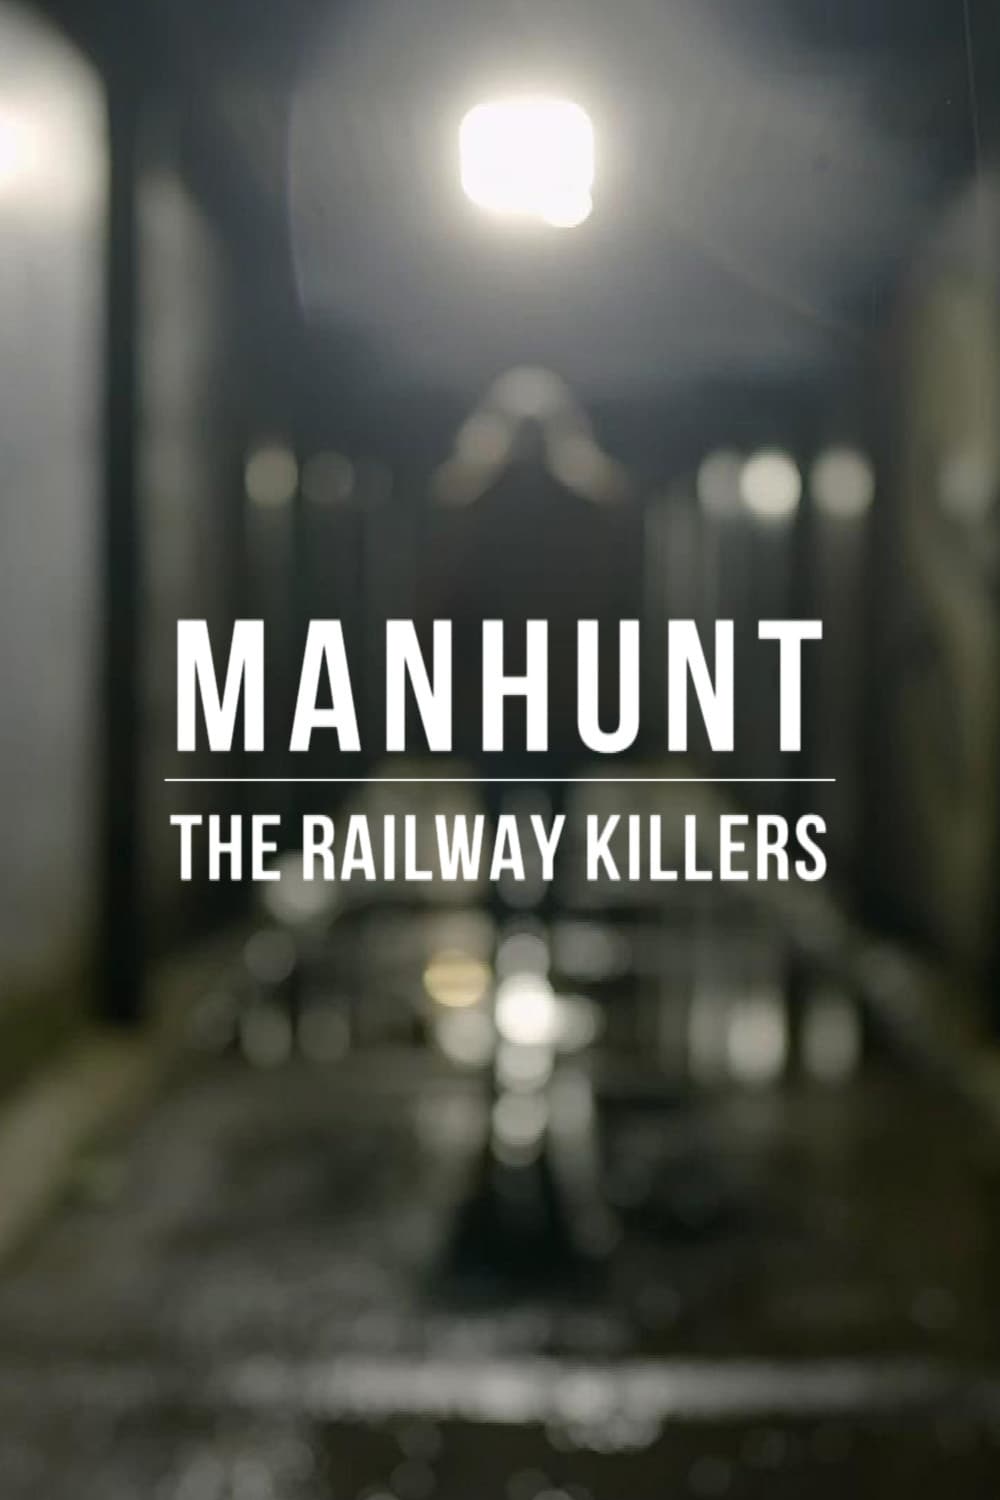 Manhunt: The Railway Killers